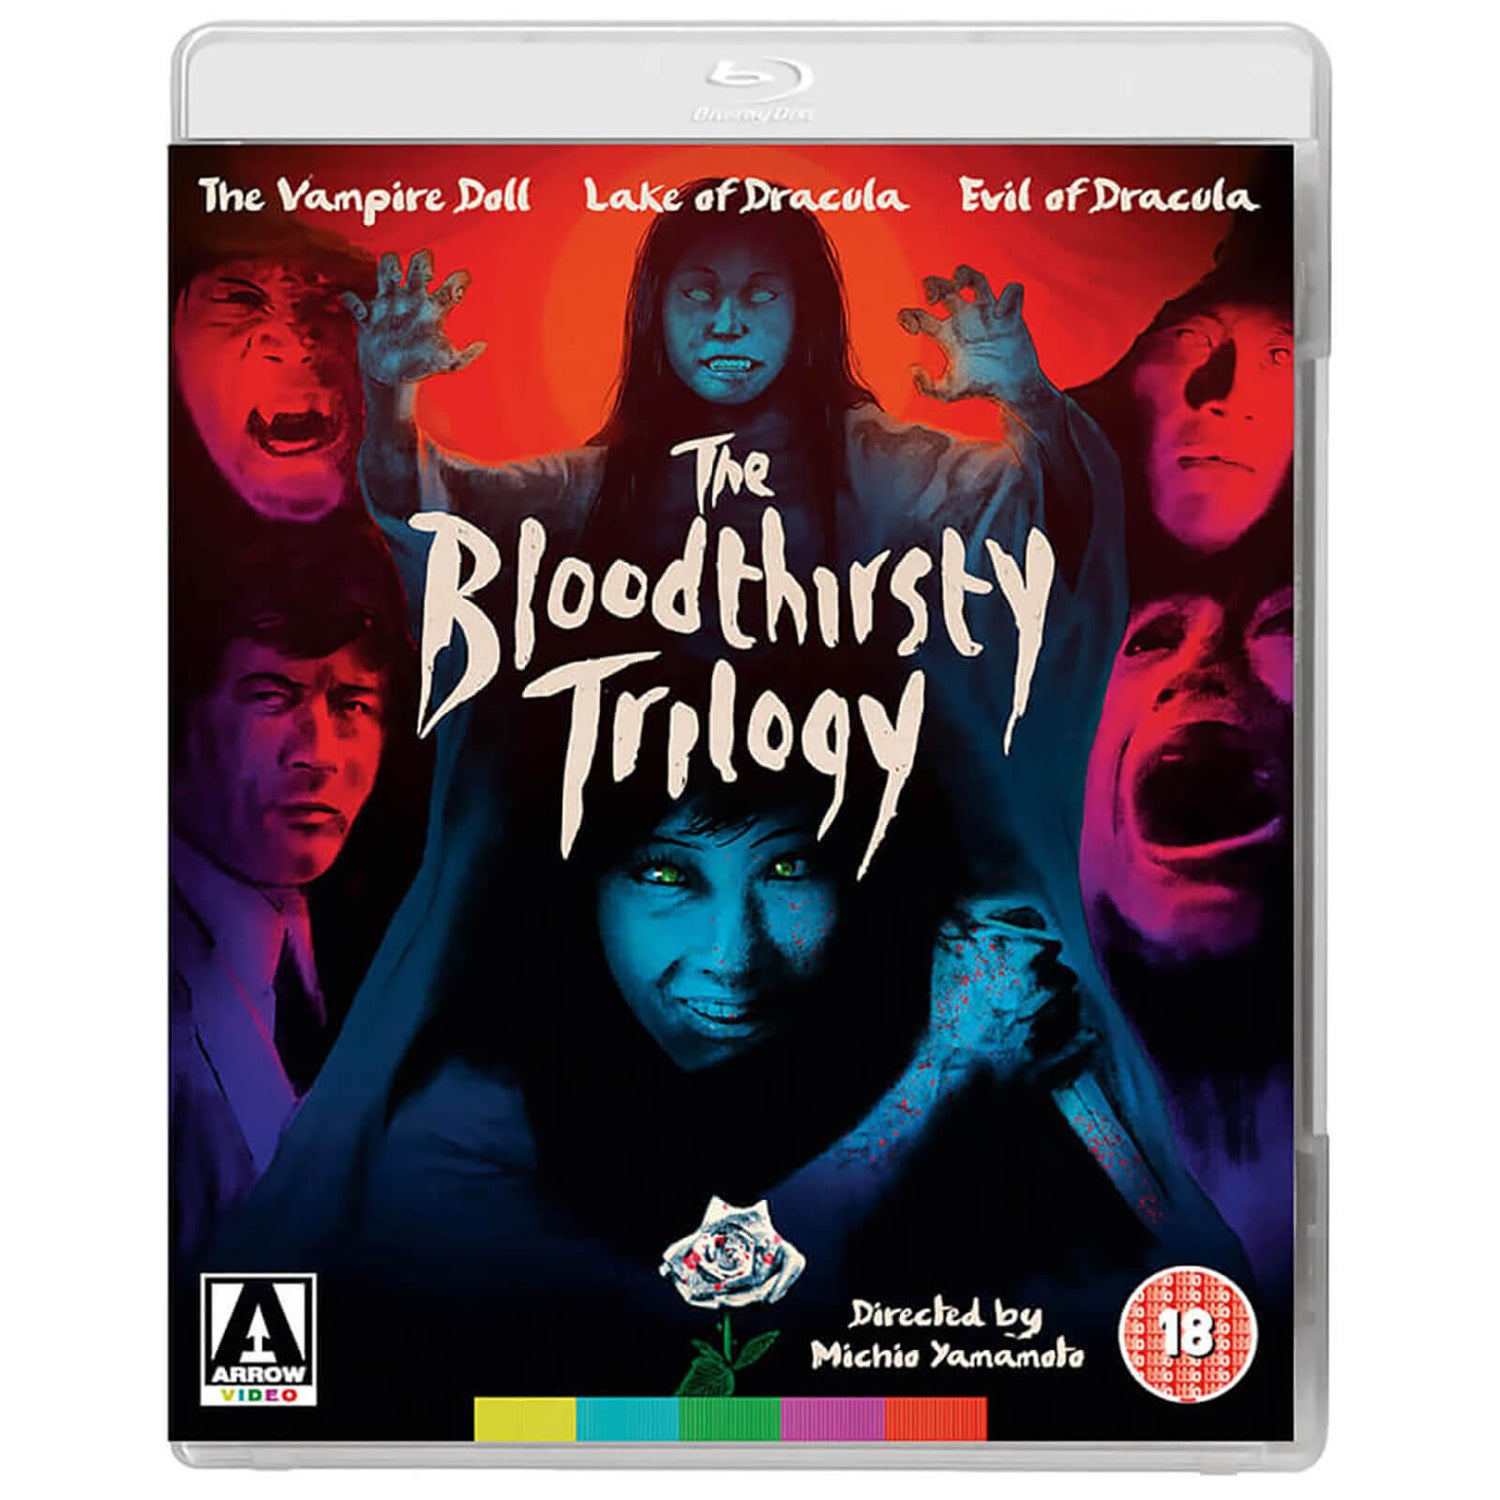 The Bloodthirsty Trilogy Blu-ray